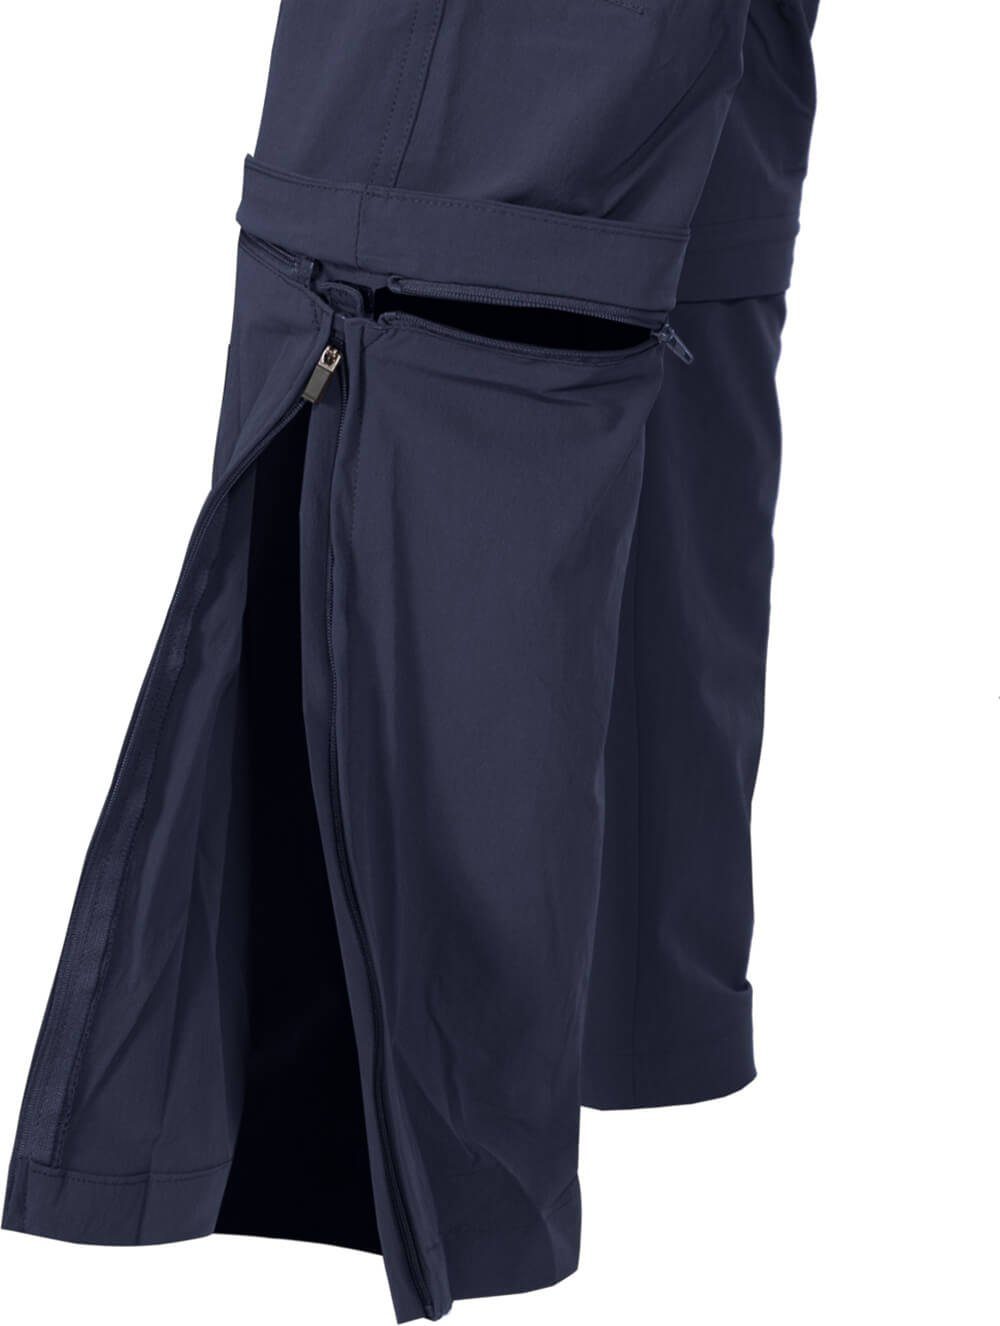 Bergson Zip-off-Hose blau Zipp-Off peacoat Herren Doppel T-ZIPP pflegeleicht, vielseitig, Wanderhose, Normalgrößen, QUEENSLAND mit